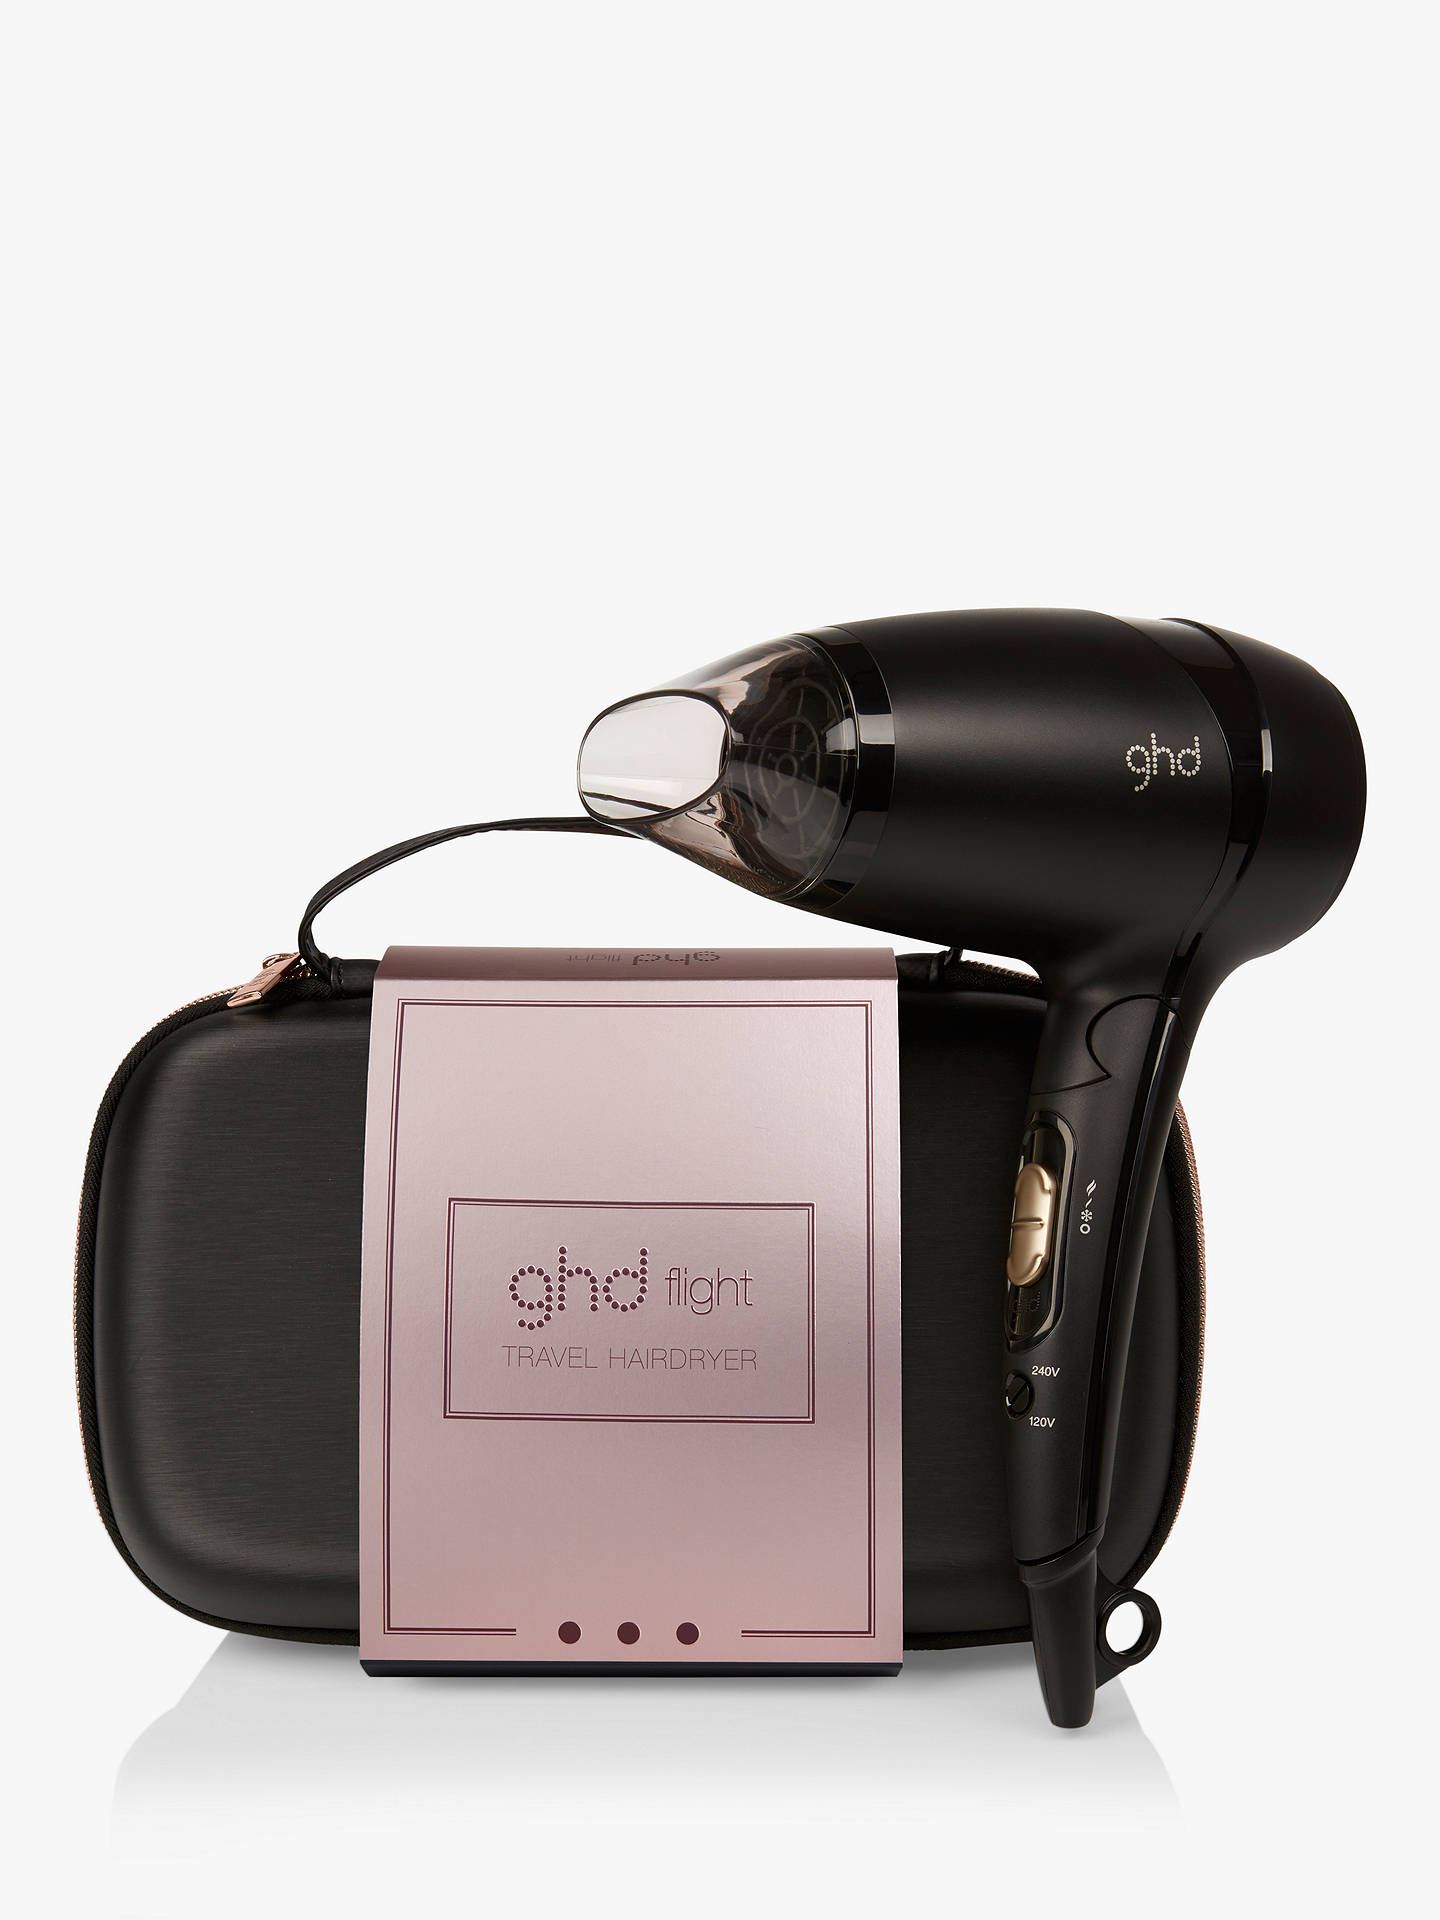 ghd hair dryer travel case